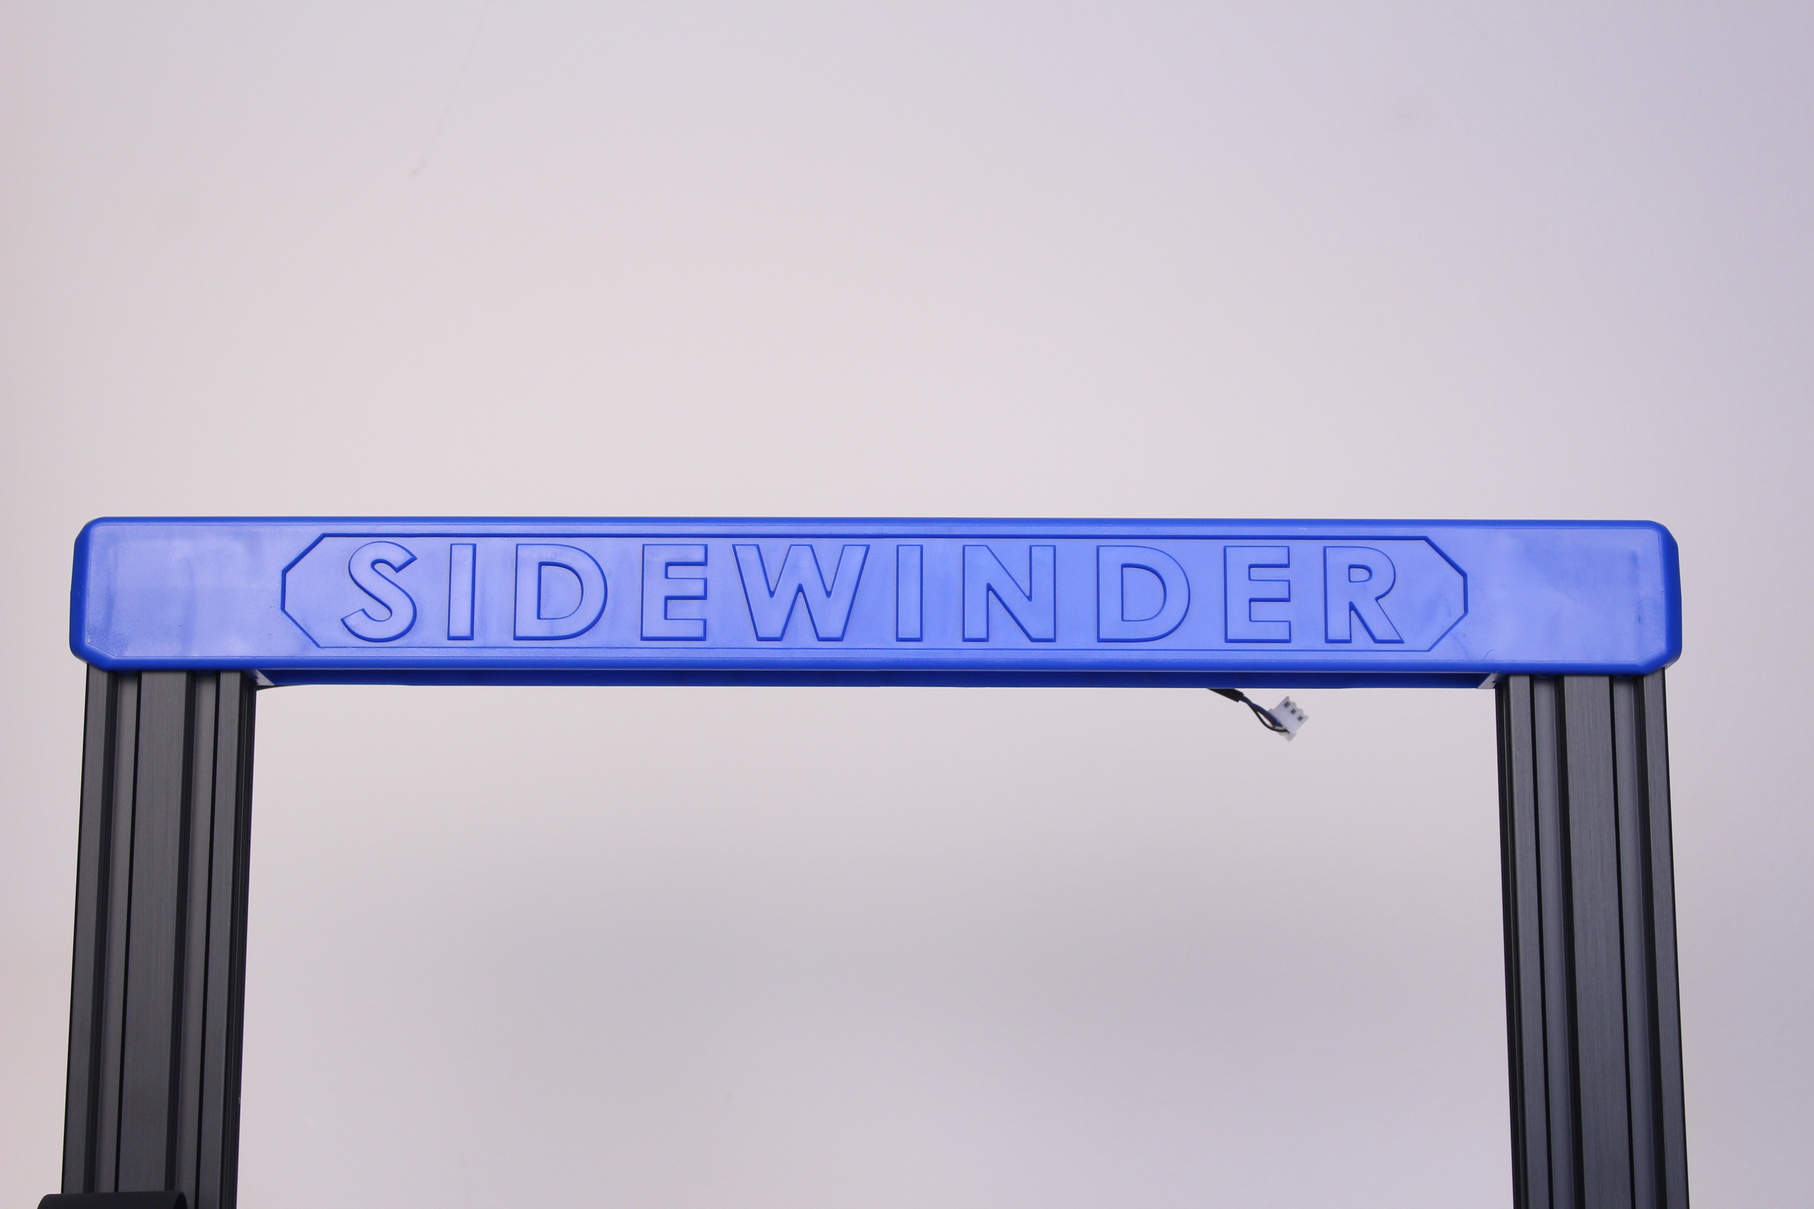 Sidewinder X2 Plastic top | Artillery Sidewinder X2 Review: A Refined Sidewinder X1?